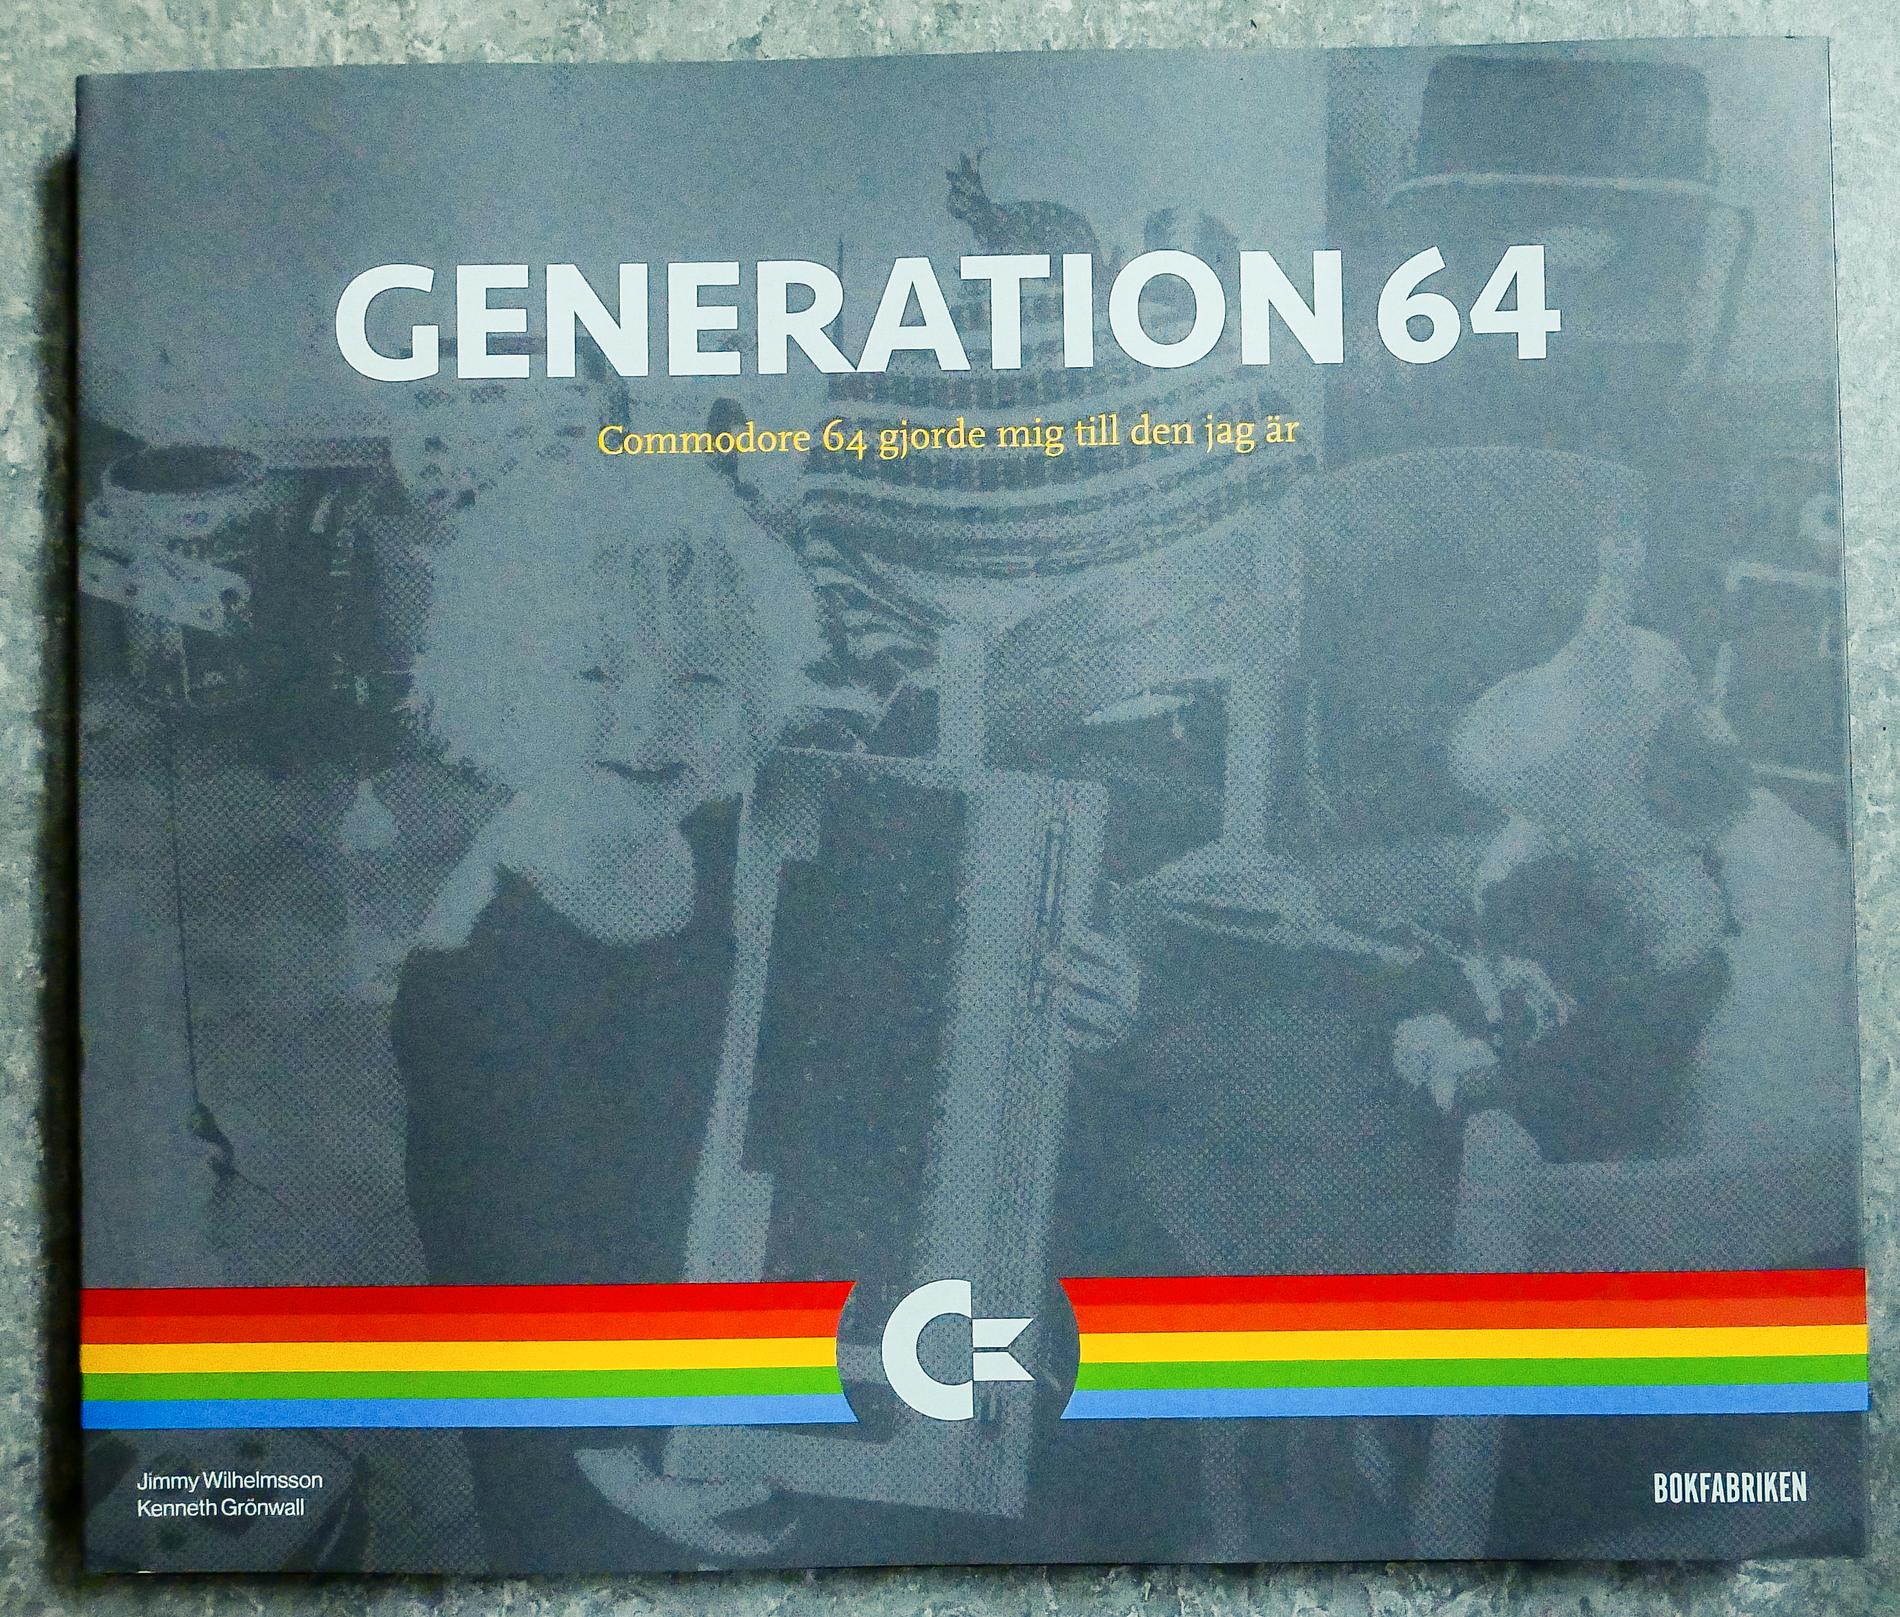 Generation 64, boken om Commodore 64.